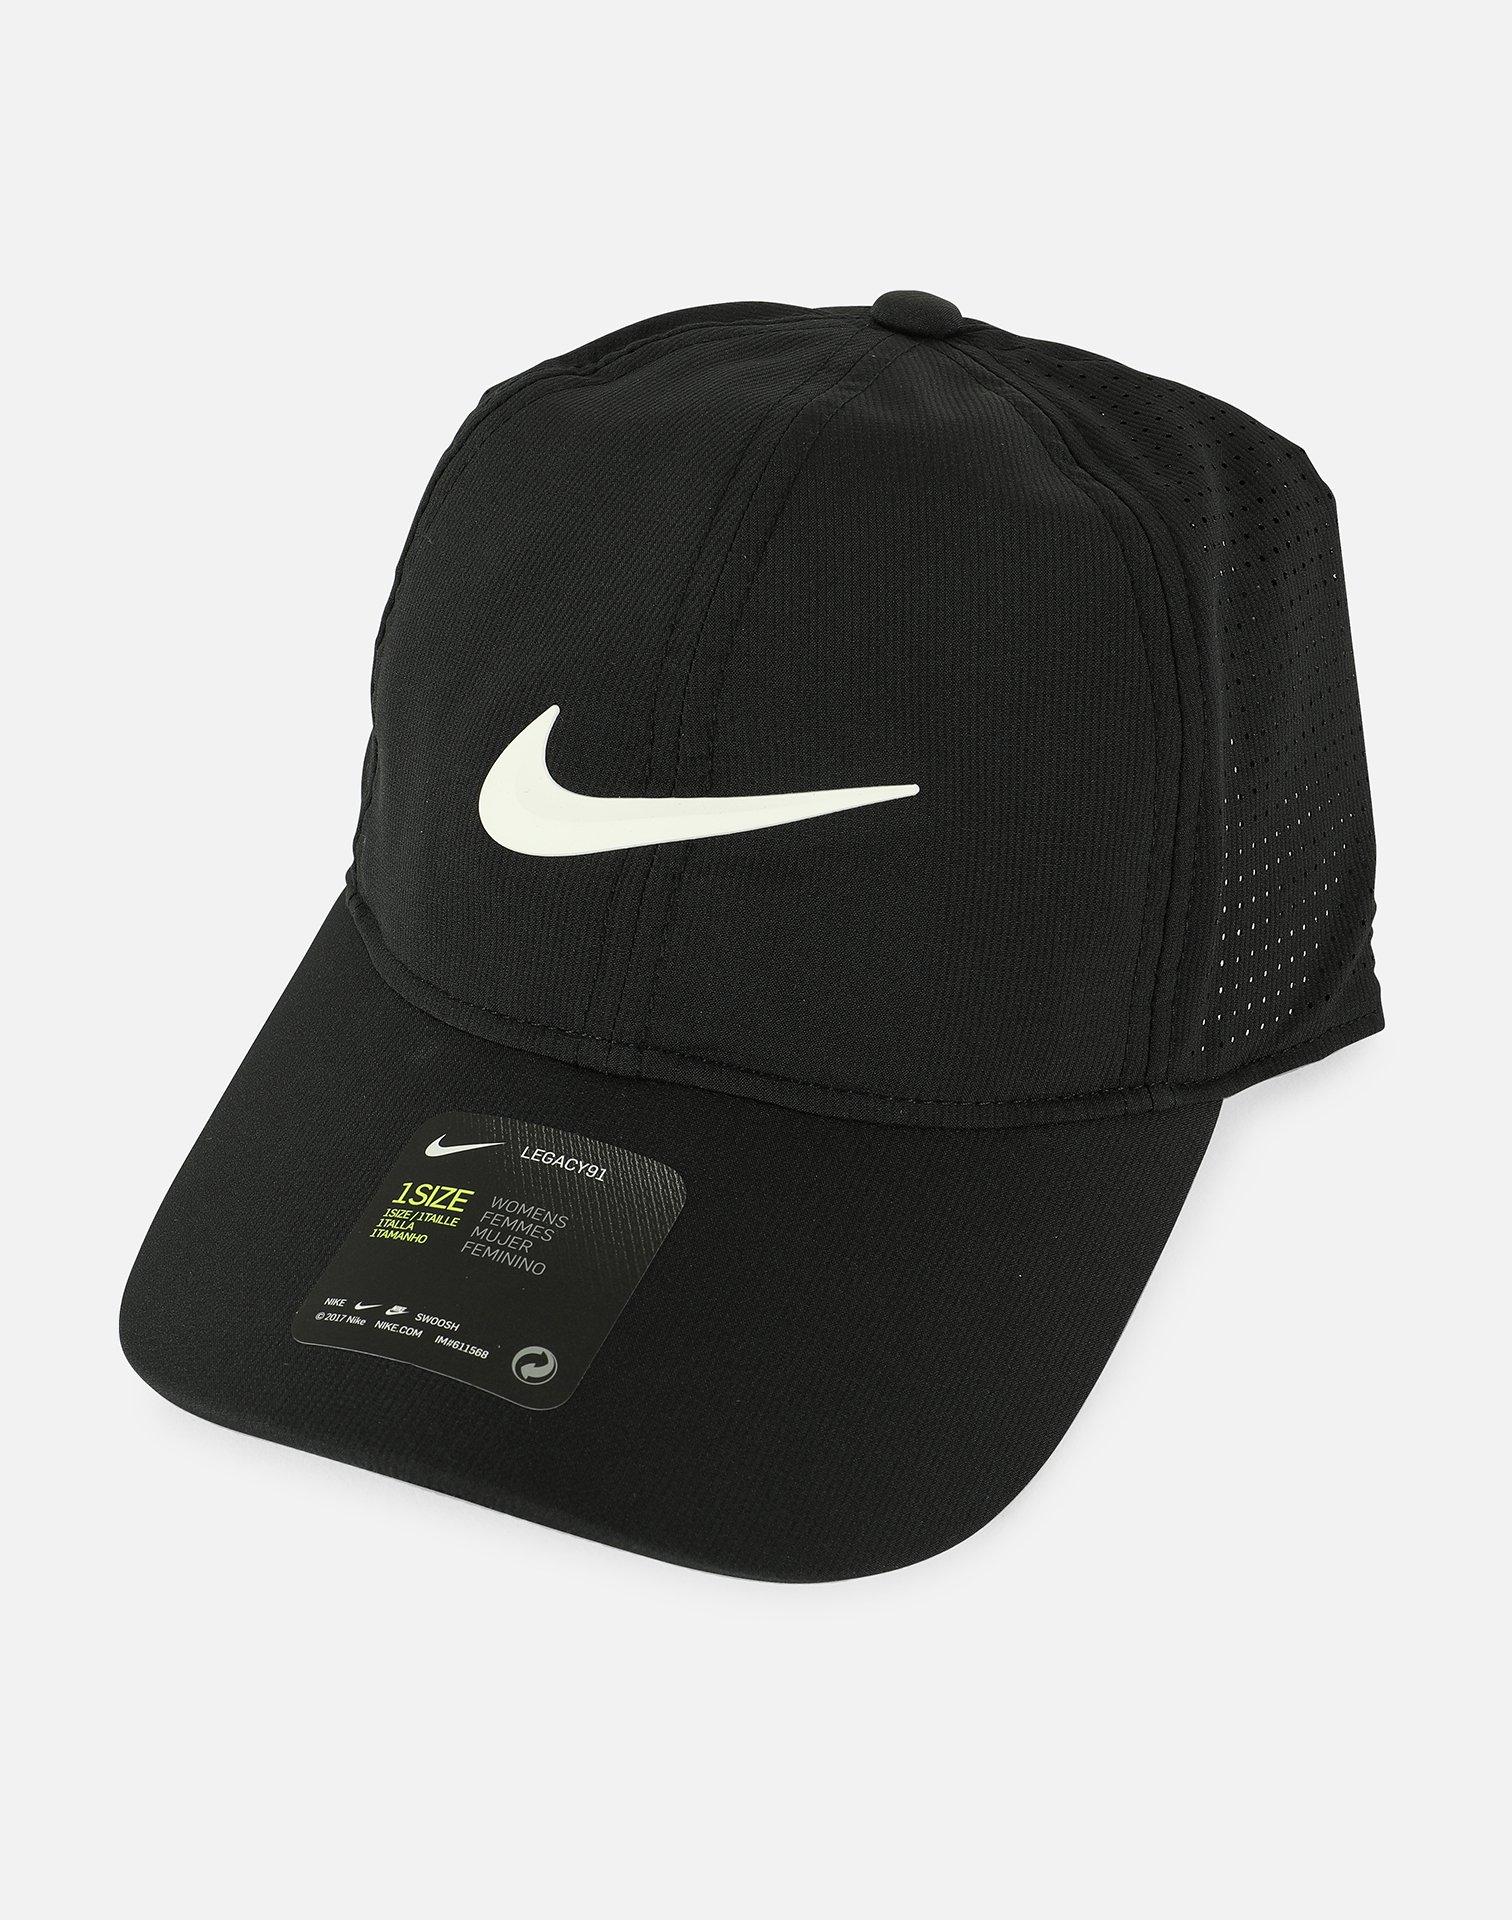 Nike Aerobill Legacy91 Golf Hat in Black for Men - Lyst